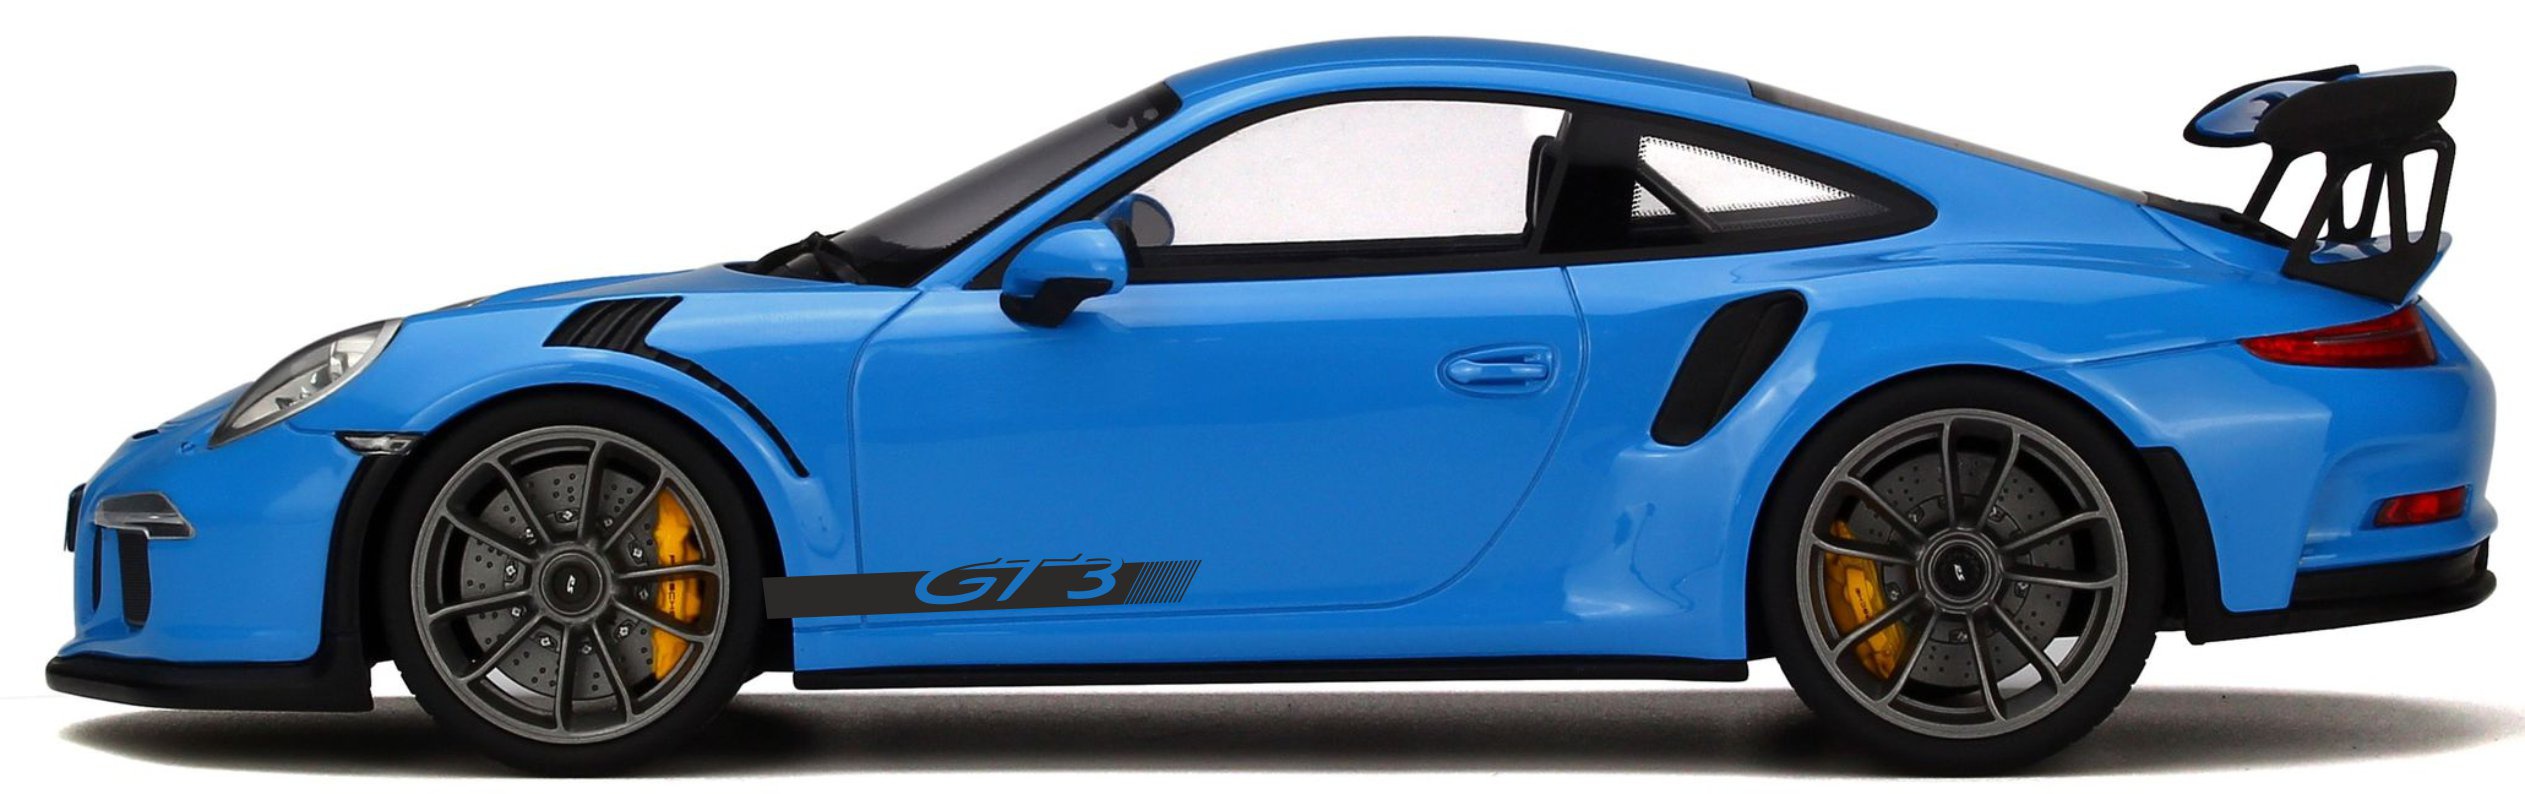 Naklejki na samochód Porsche 911 GT3 RS STICKER DECALS STRIPES